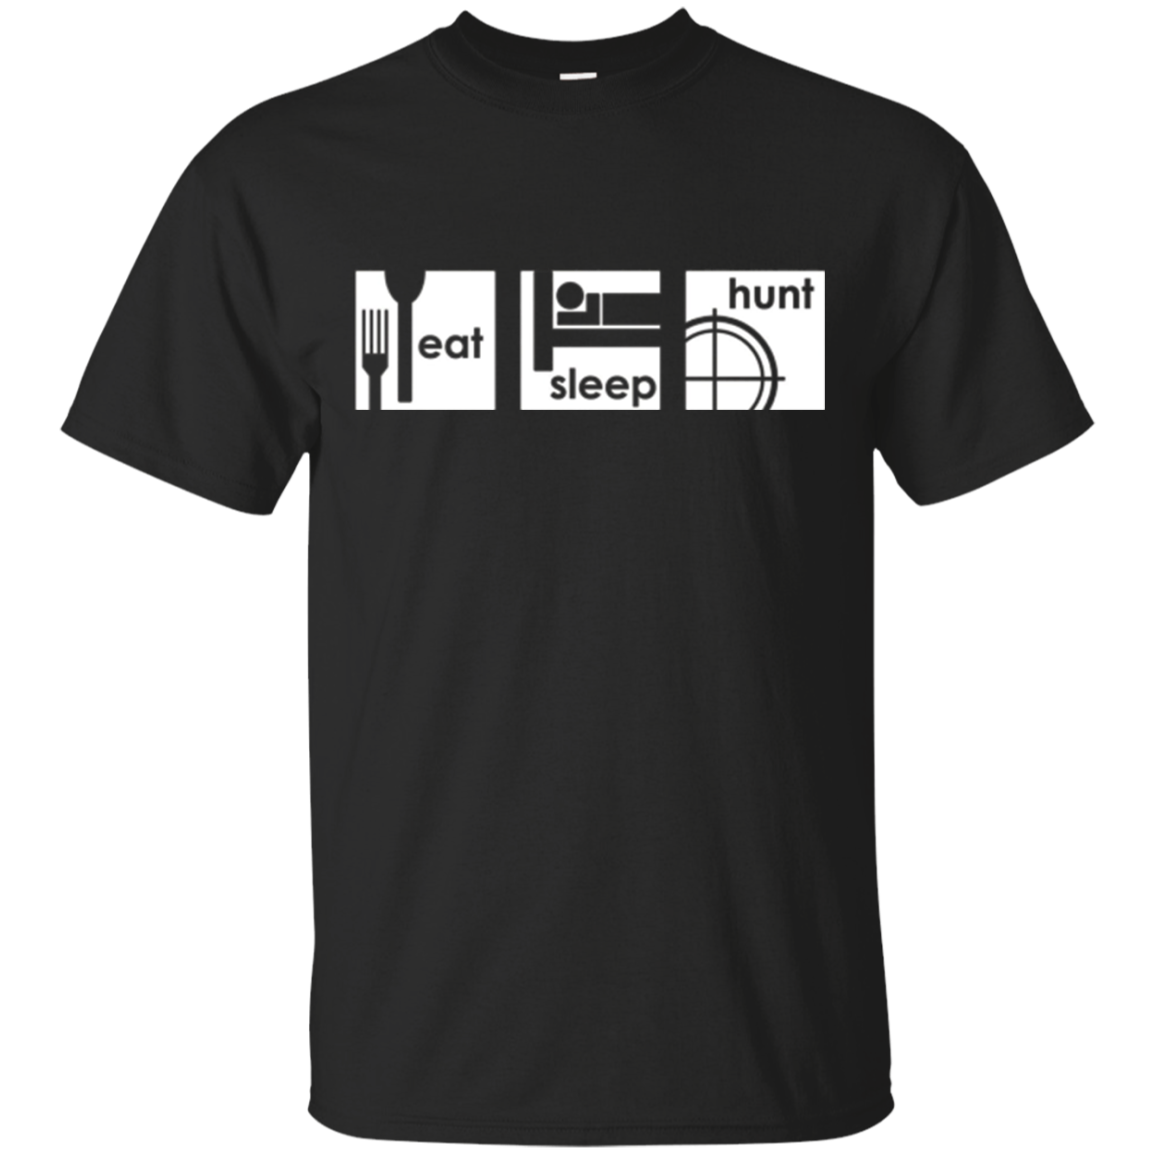 Eat Sleep Hunt Tee T Shirt Hunting Target Deer